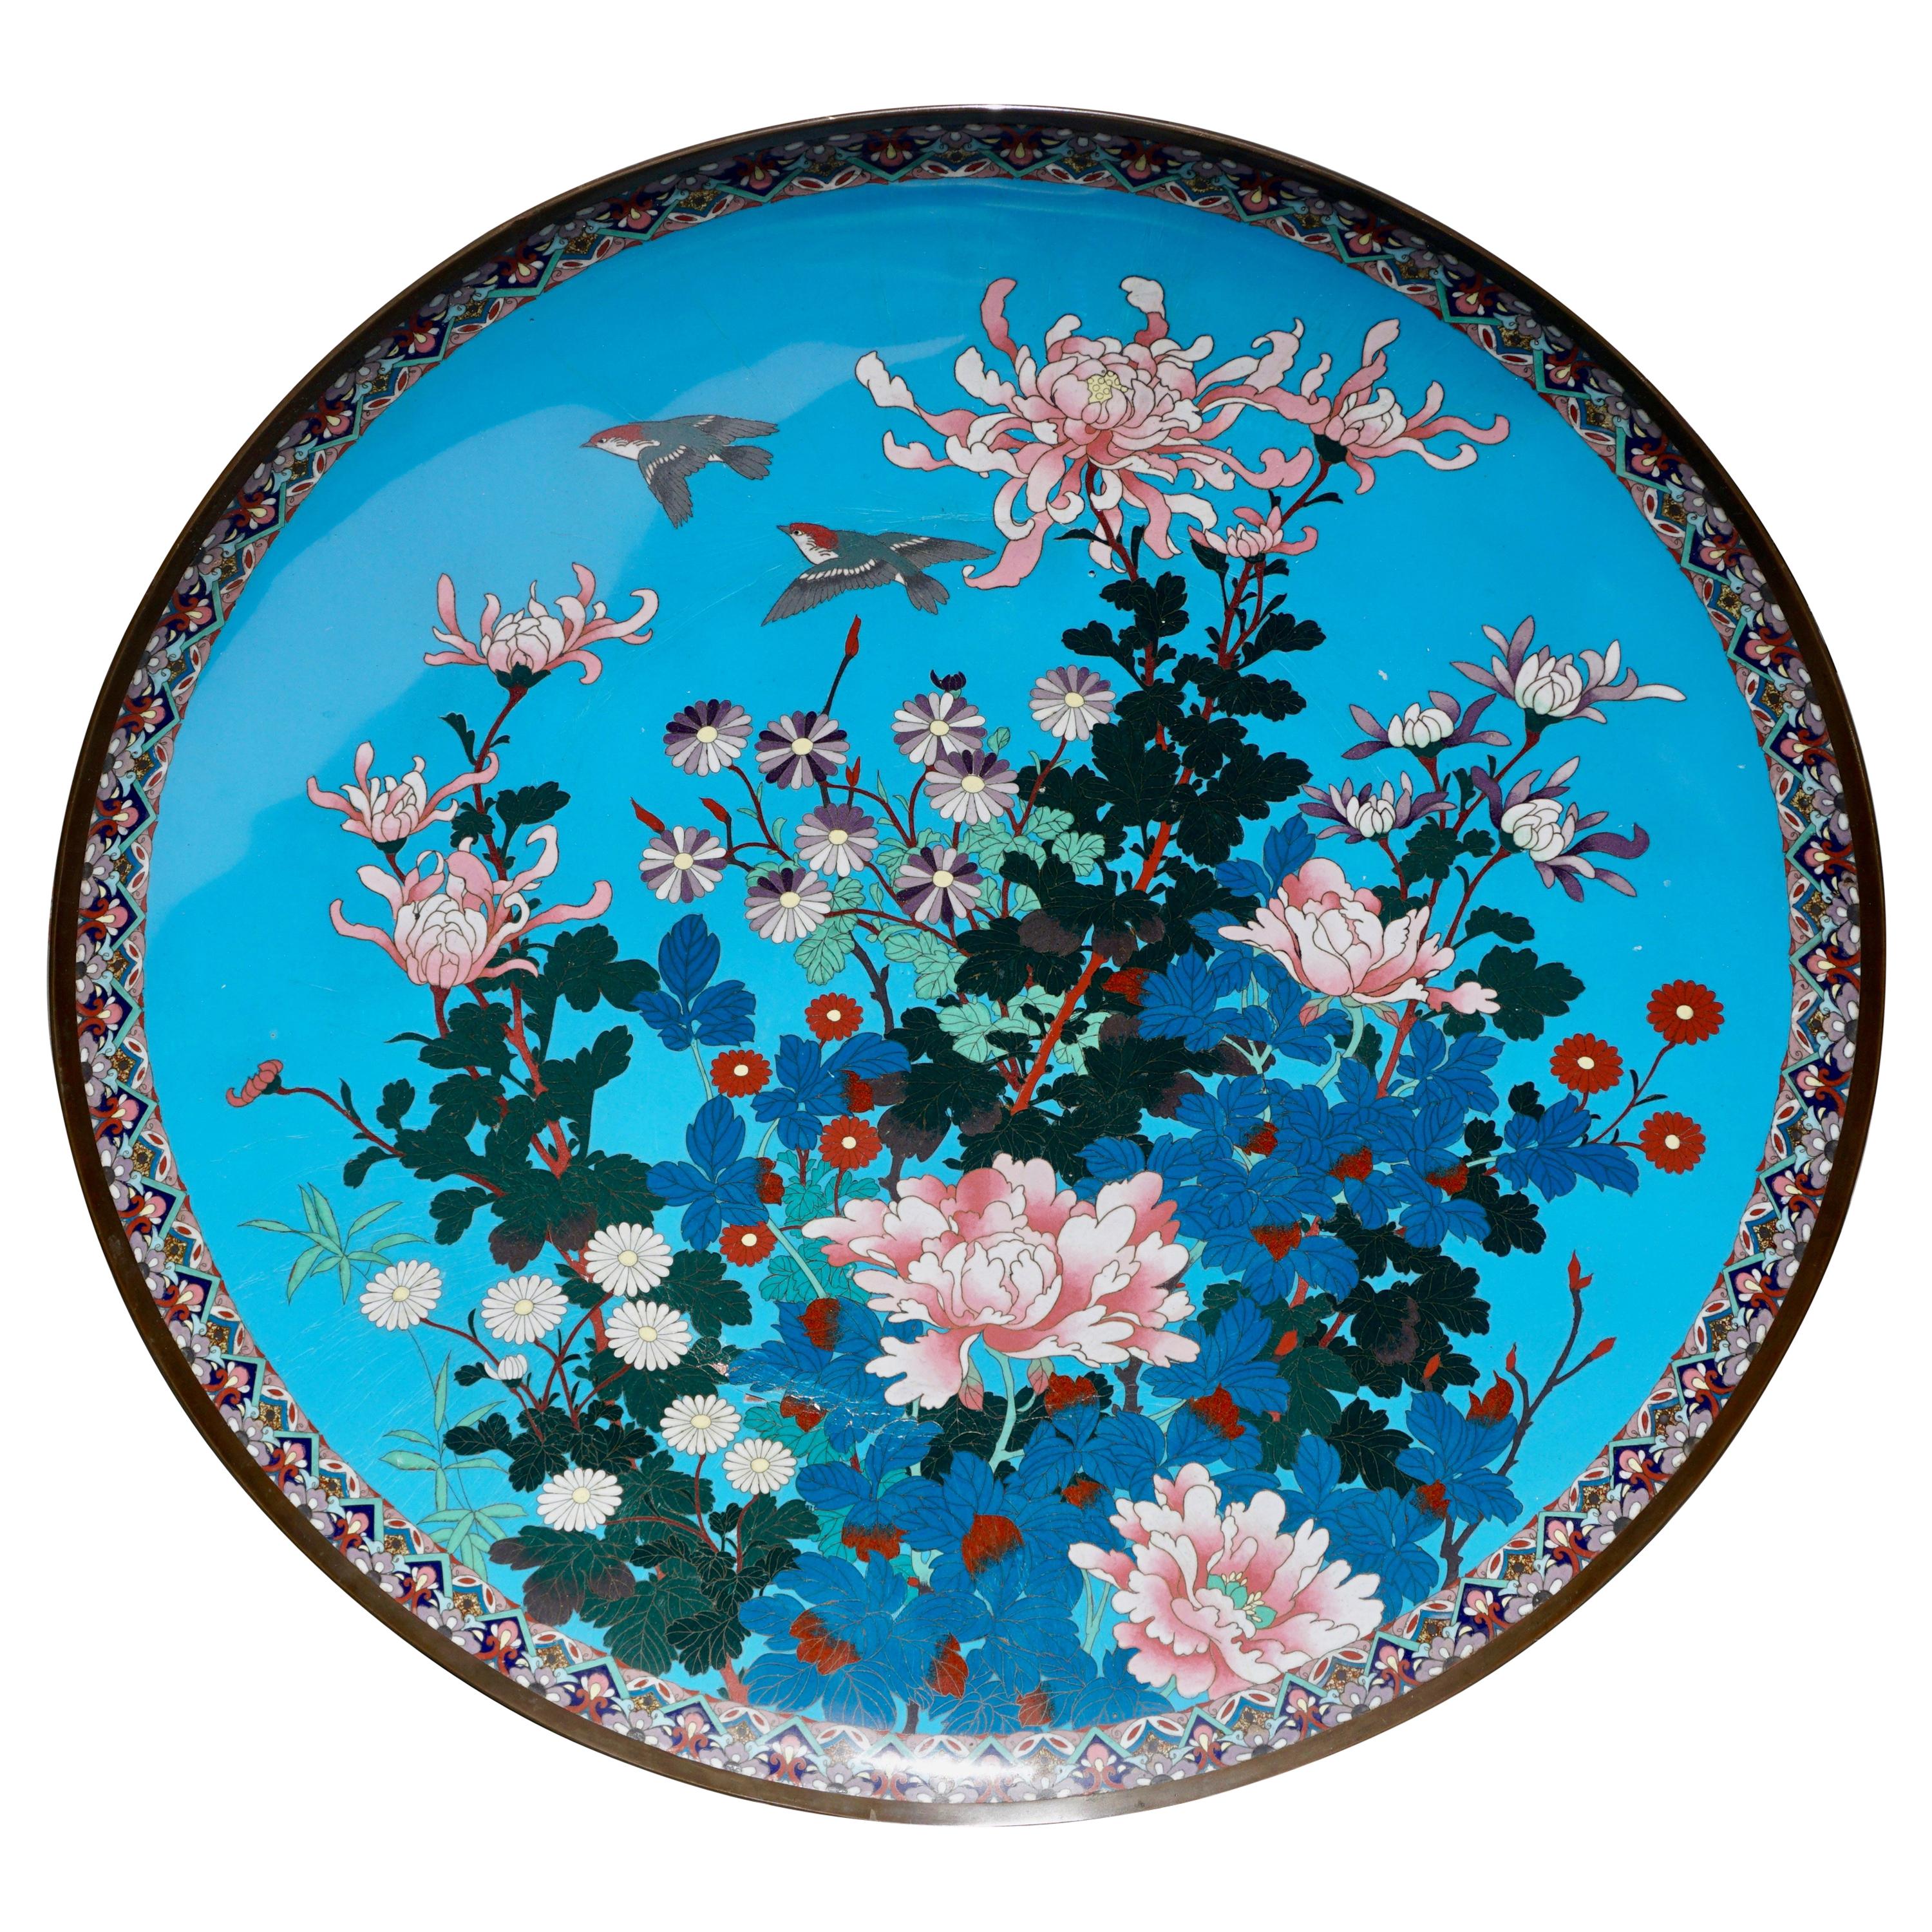 Quality Antique Japanese Cloisonné Plate or Wall Art Decoration